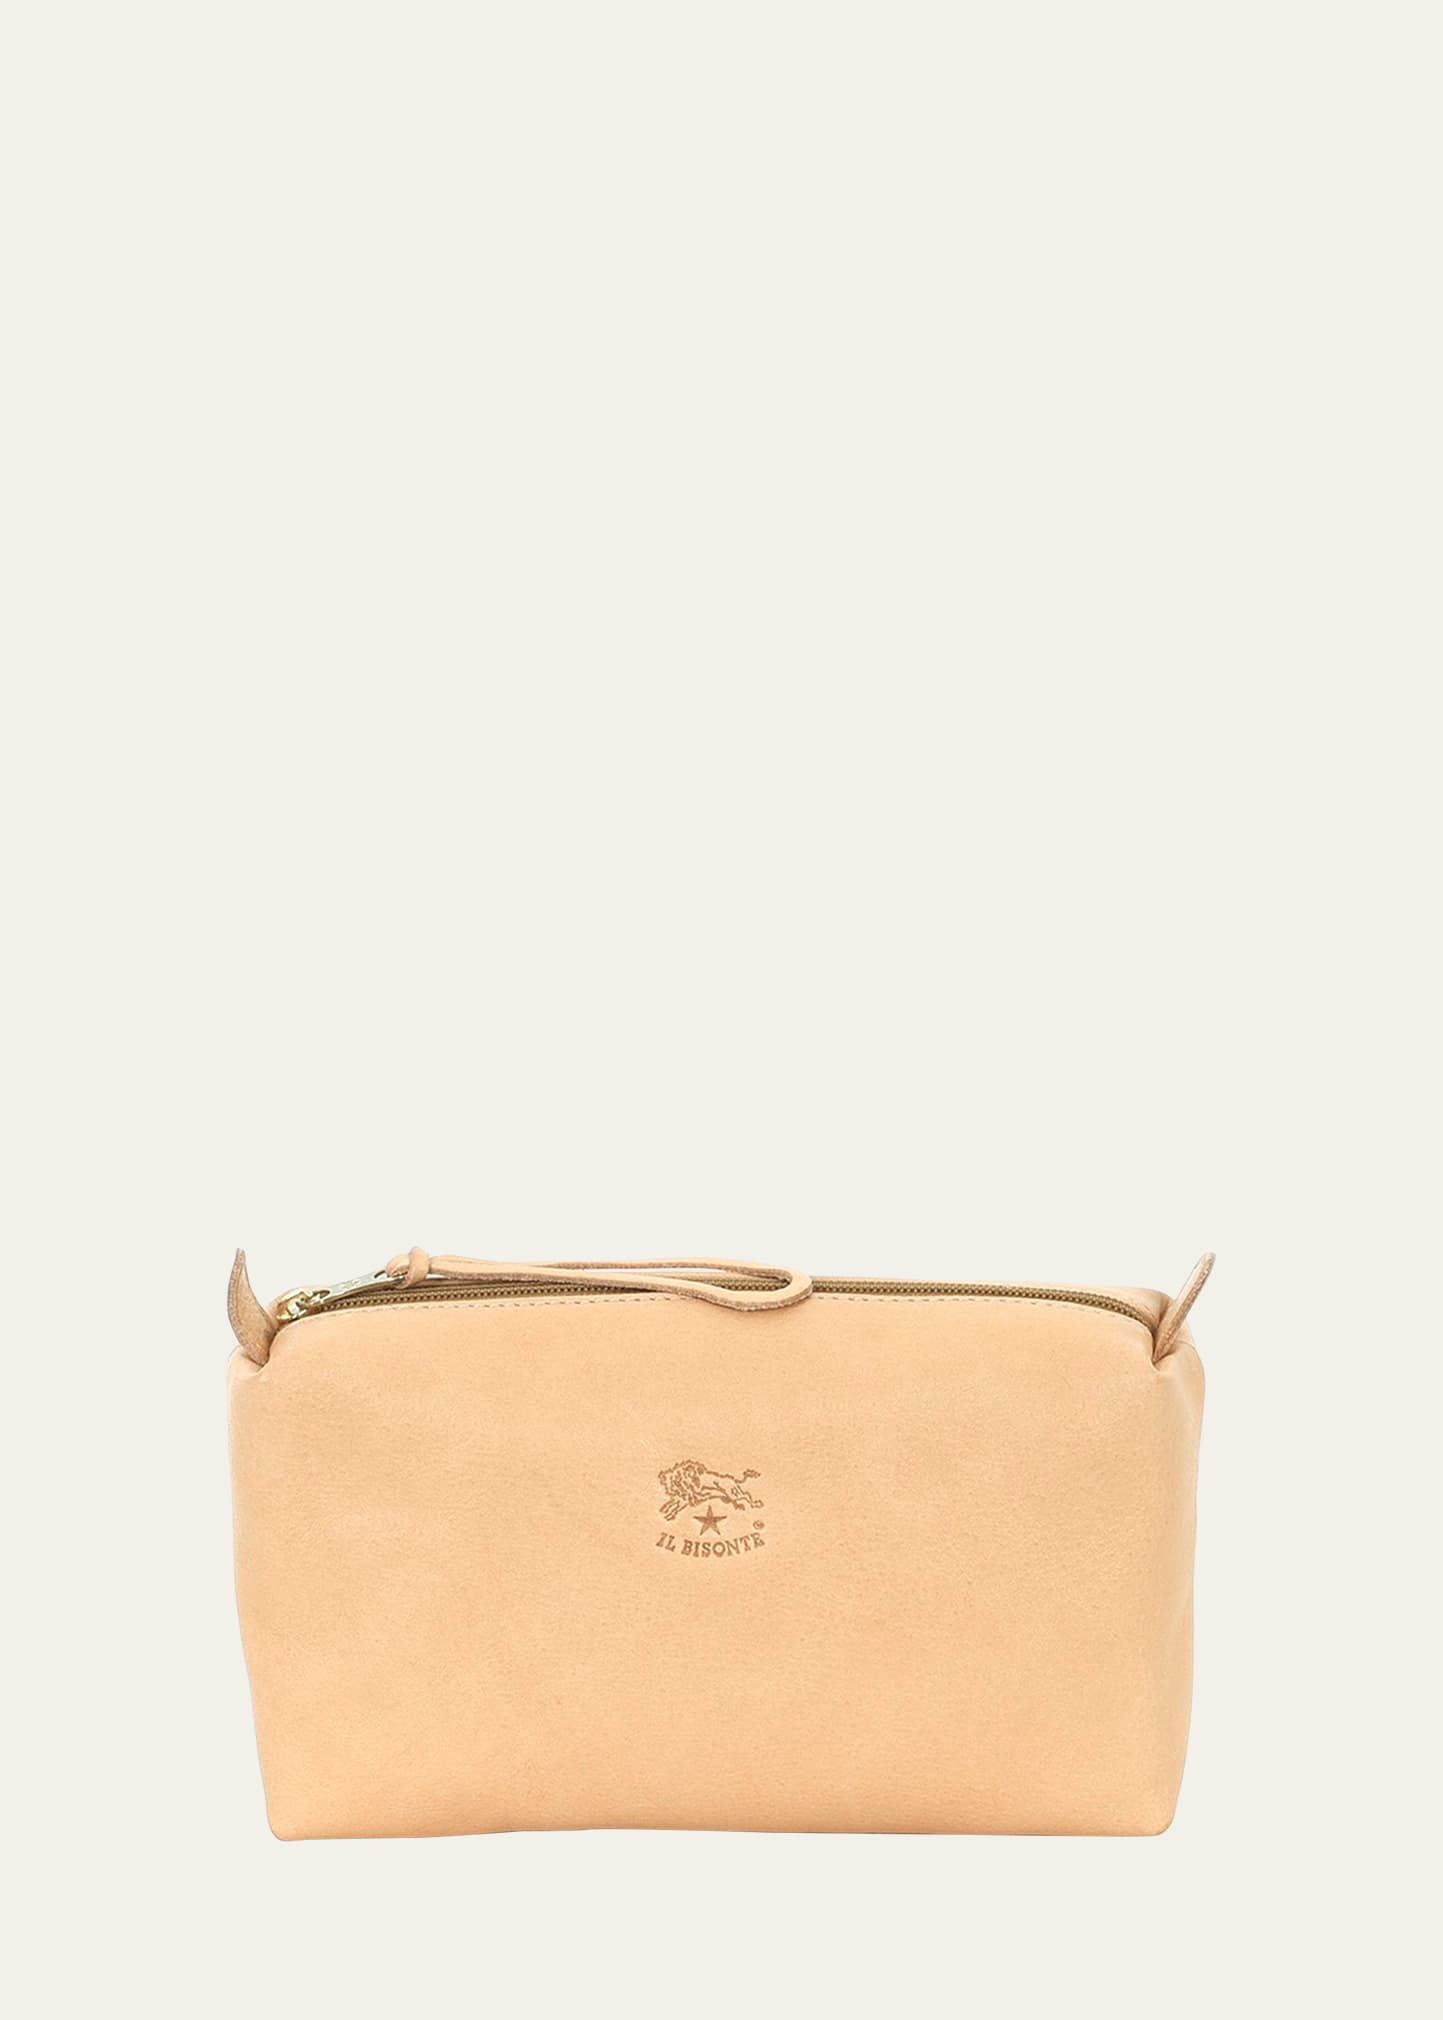 Classic Zip Leather Clutch Bag